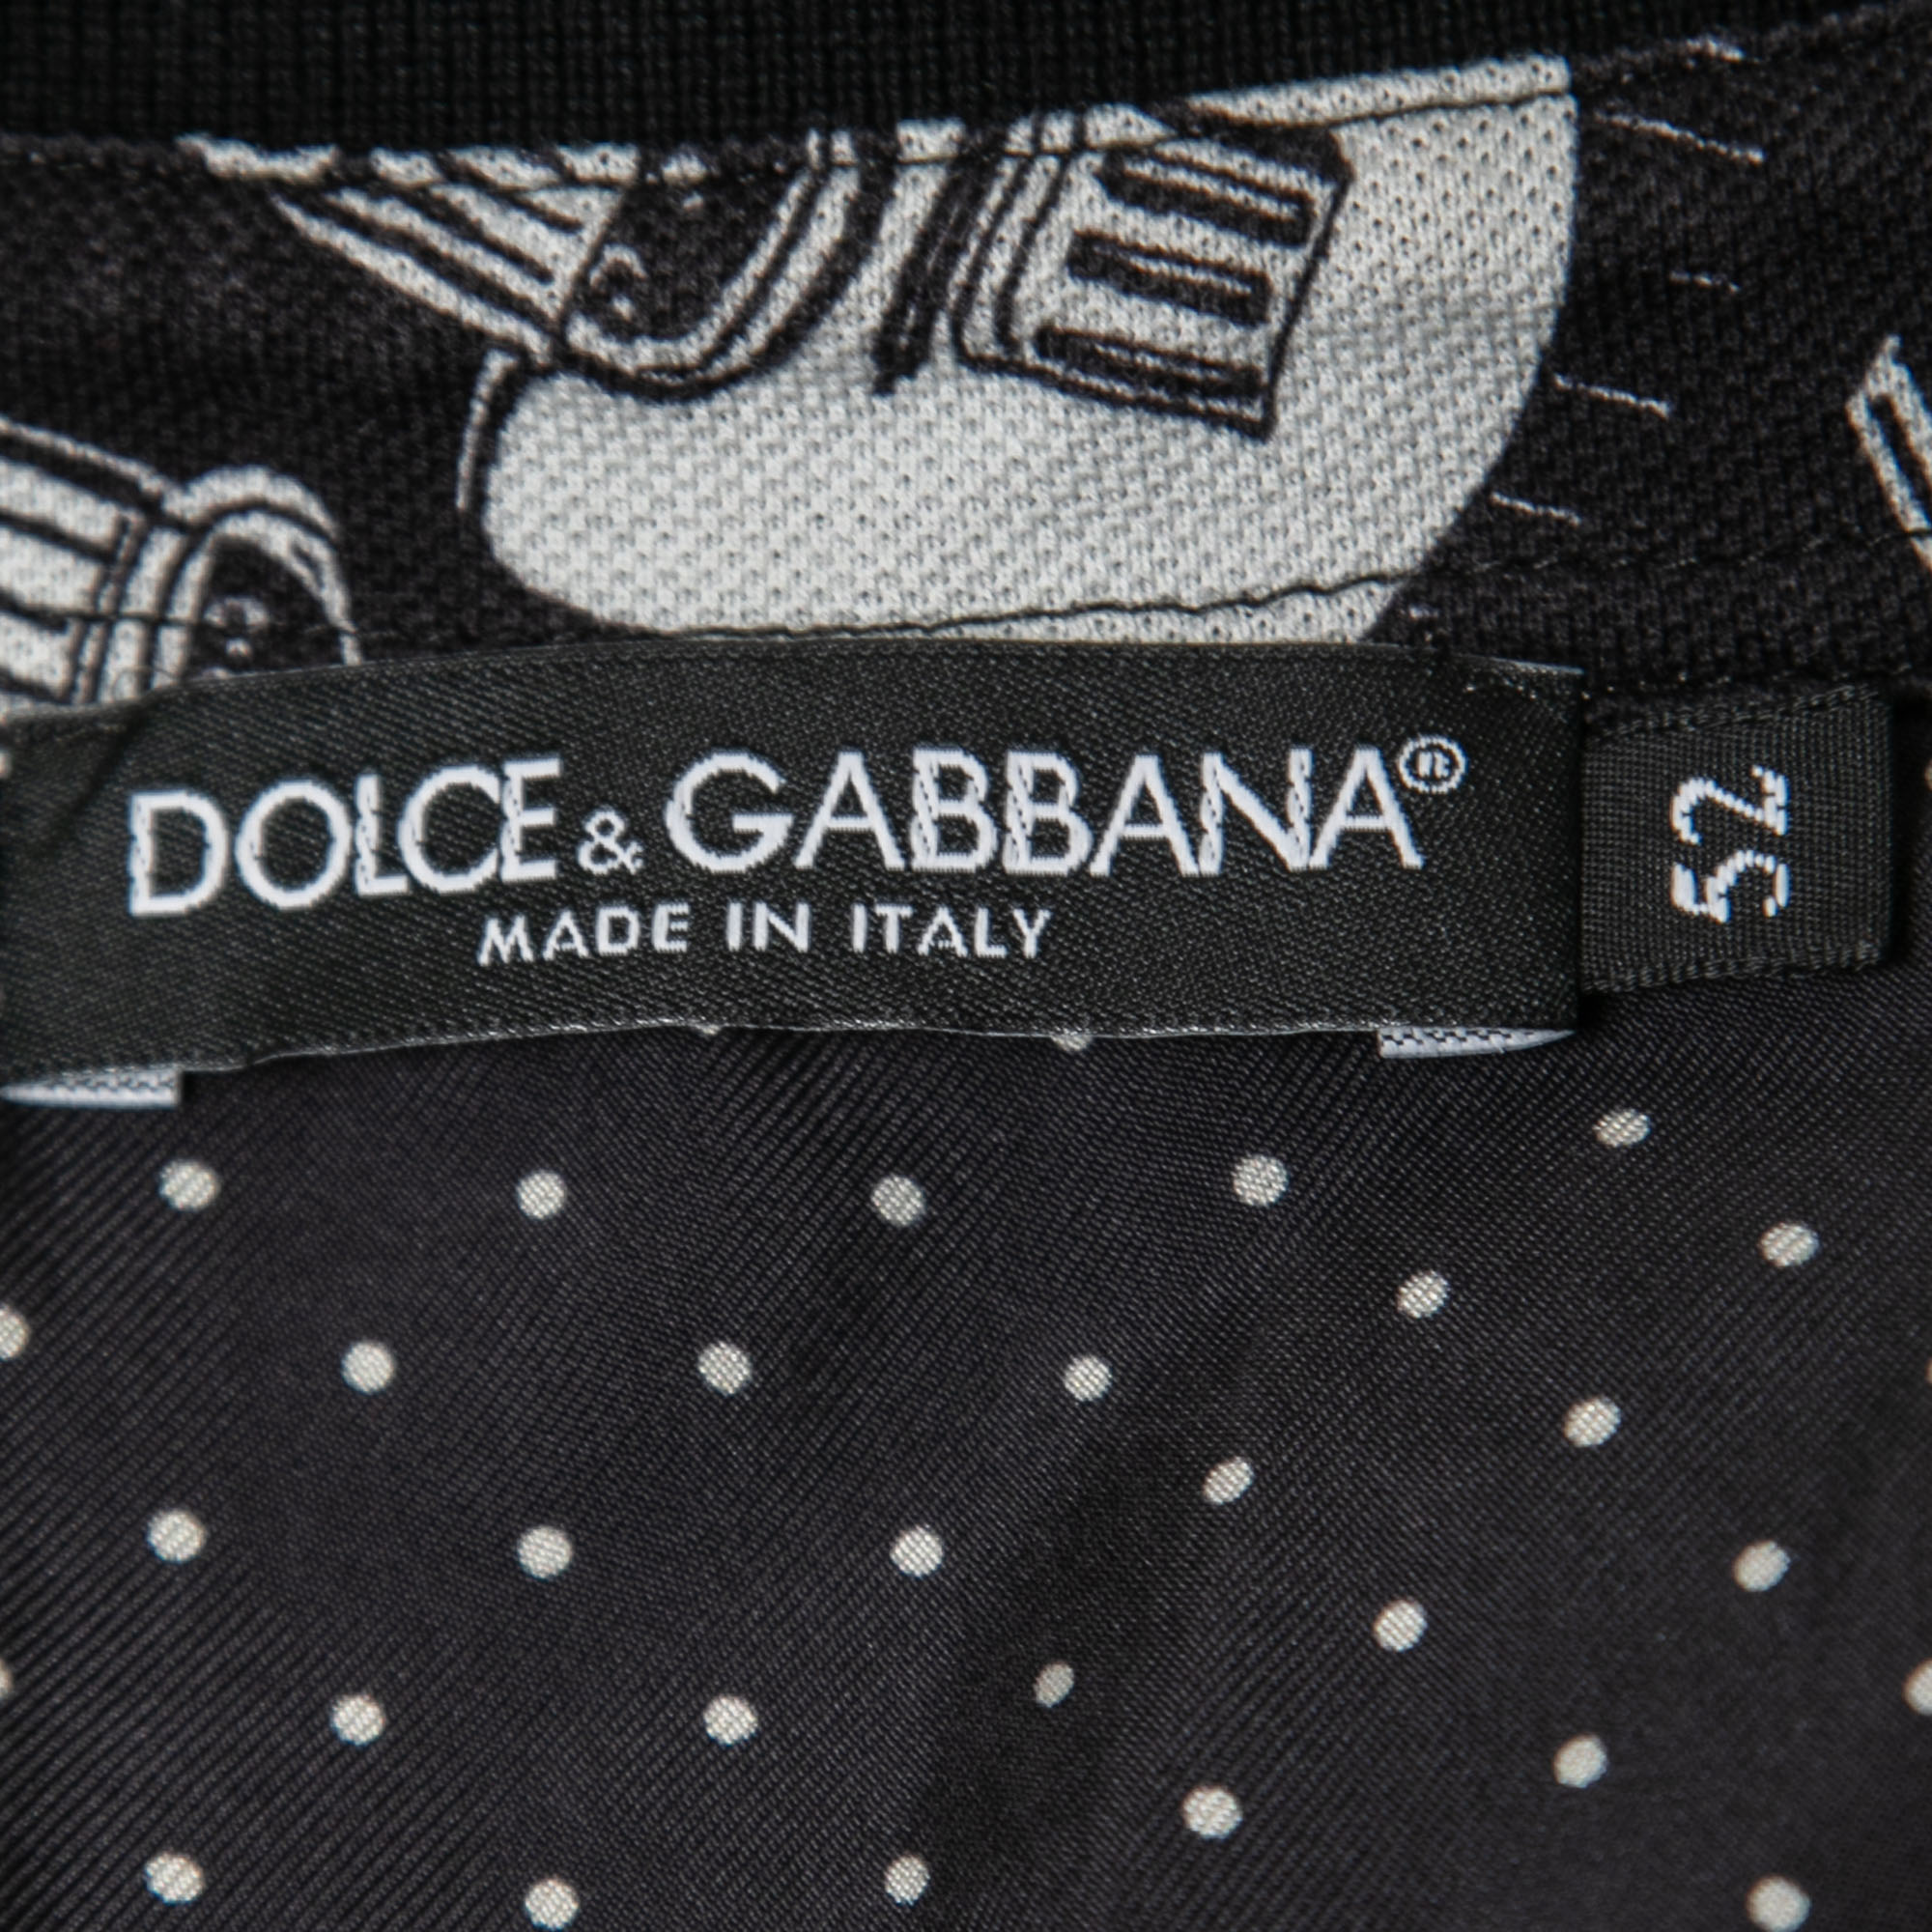 Dolce & Gabbana Black Music Print Cotton Pique Polo T-Shirt XL